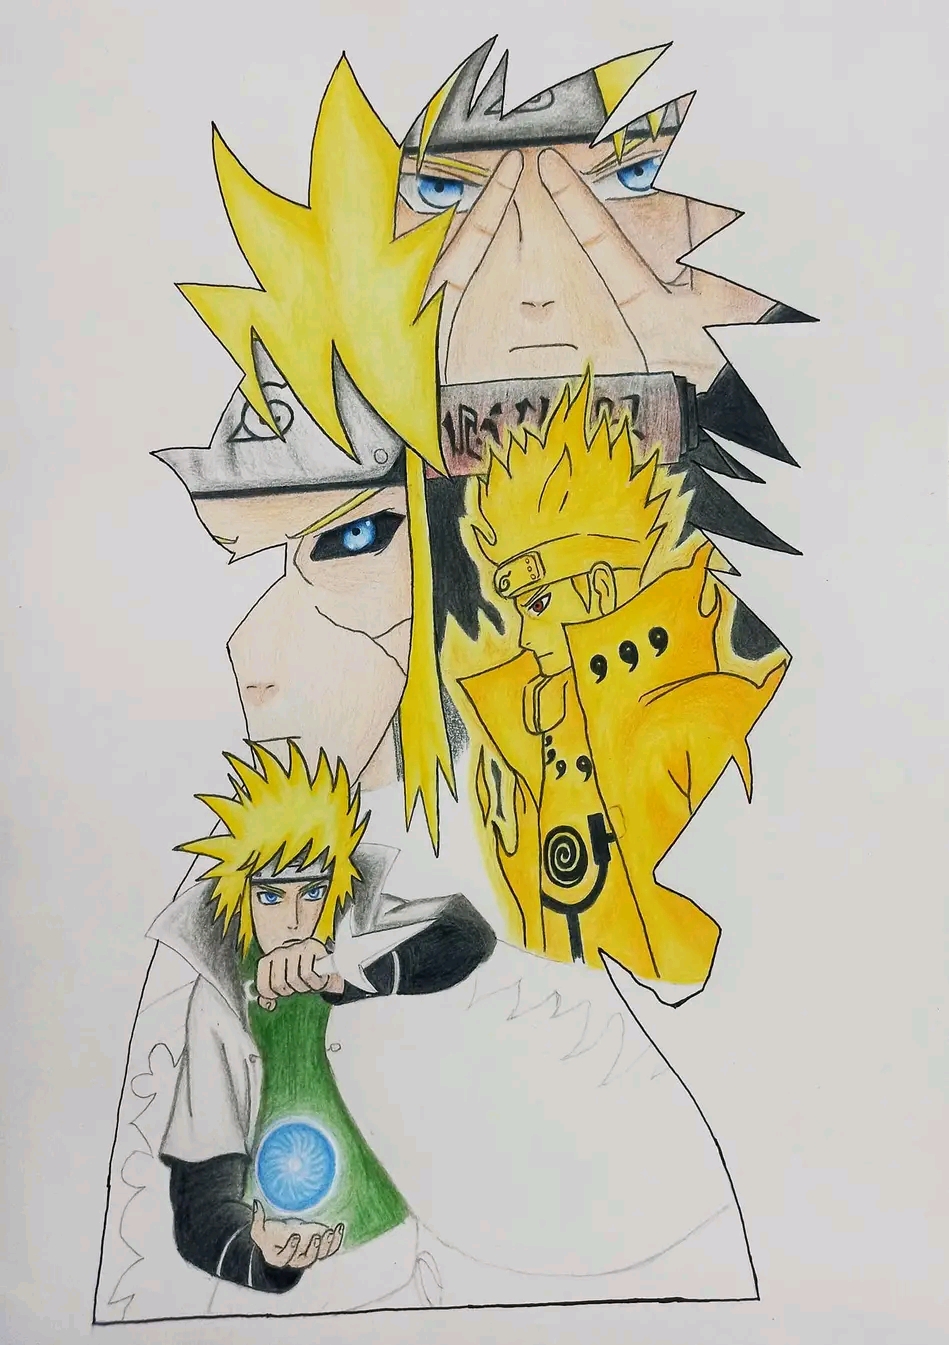 Minato, My Naruto Drawings